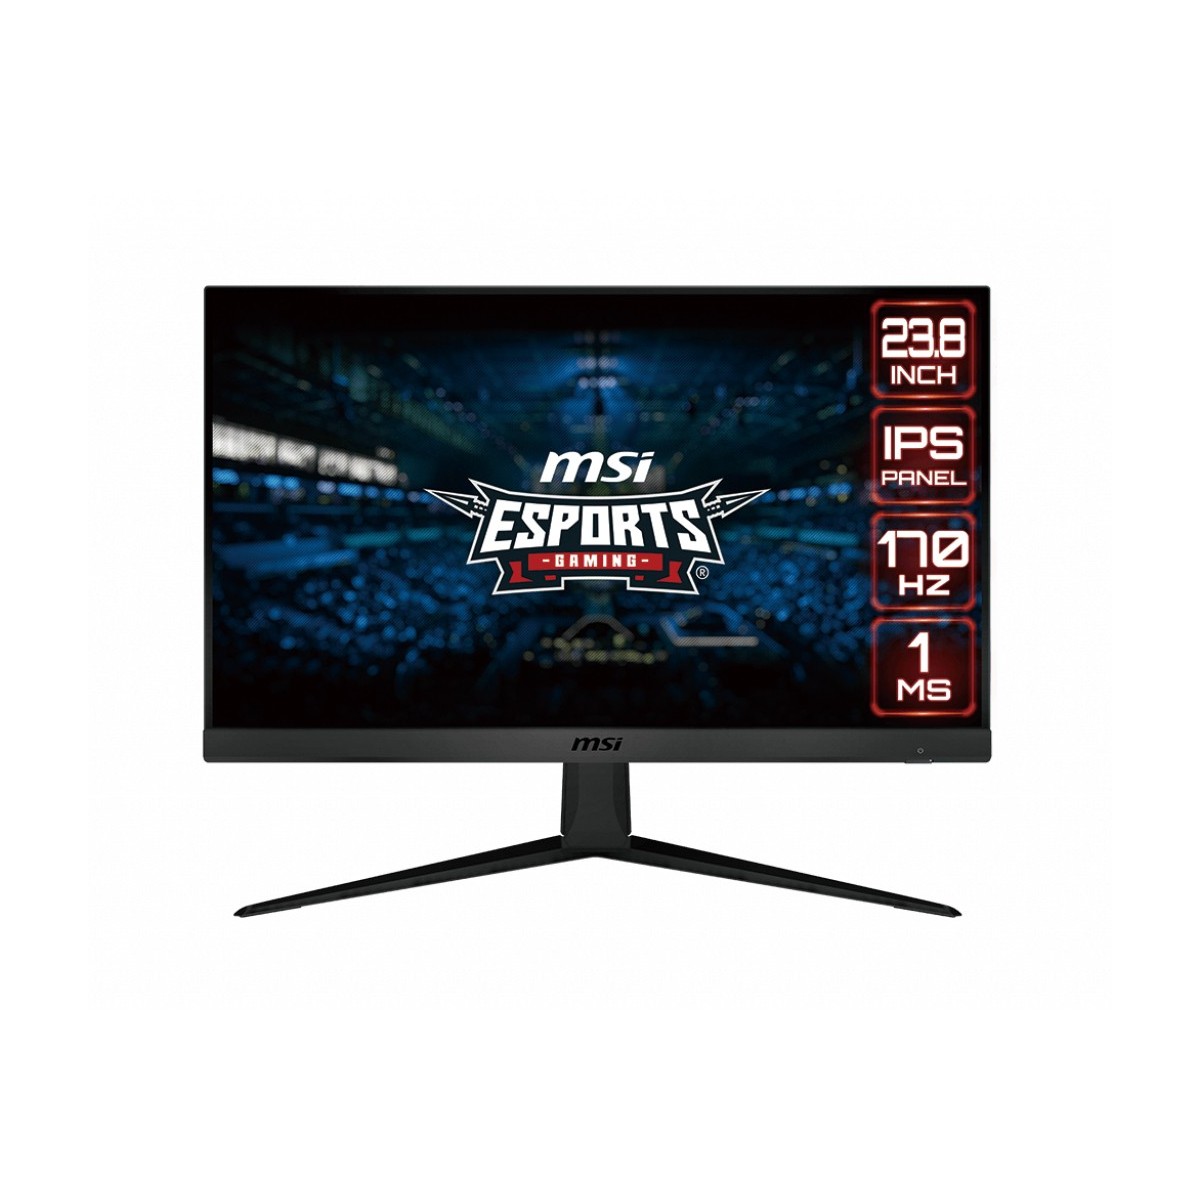 MSI Optix G2412 - LED monitor - Full HD 1080p - 23.8